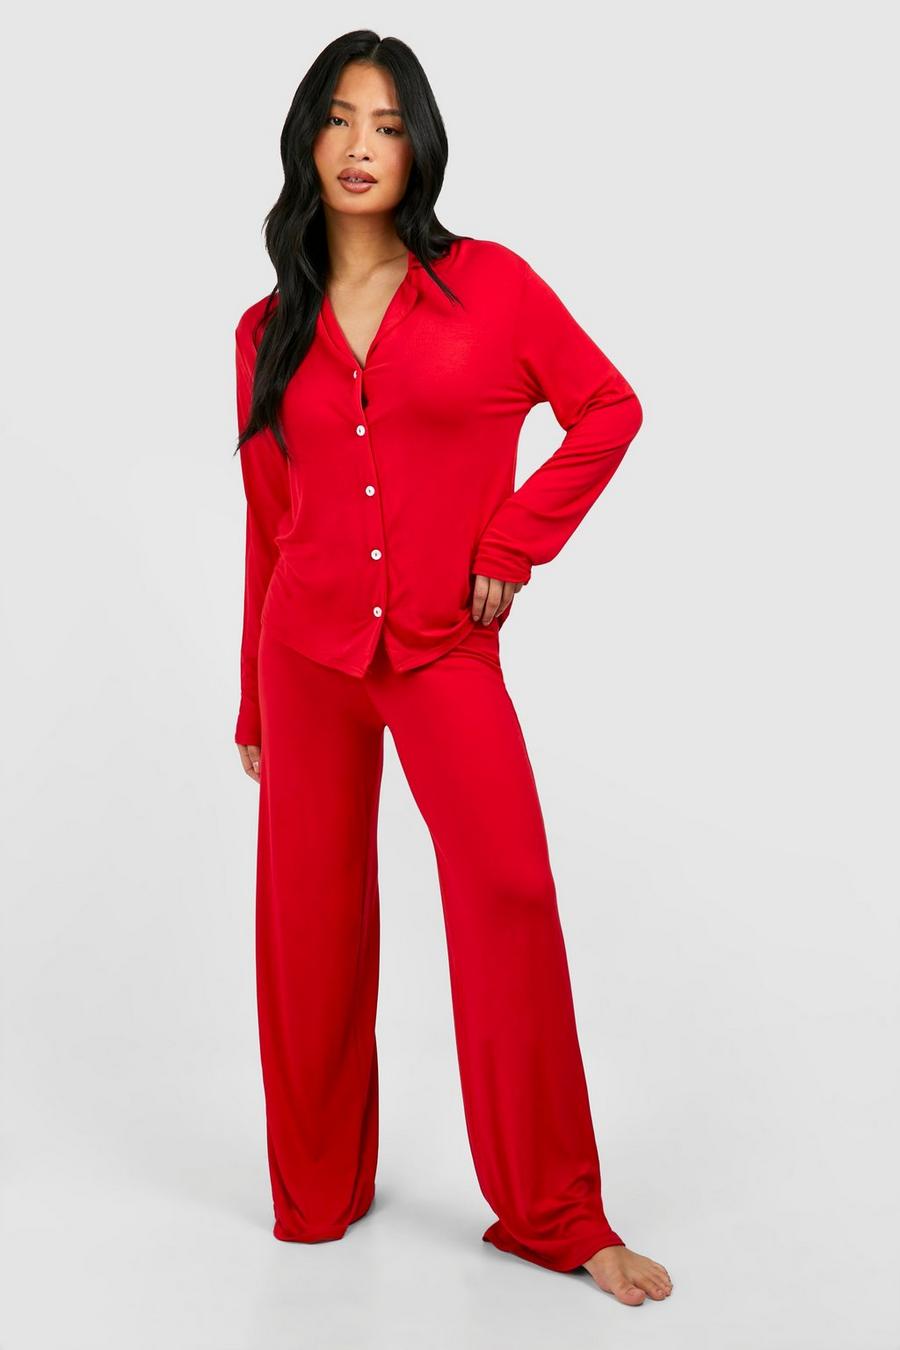 Red Petite Long Sleeve Button Up Pajama Set